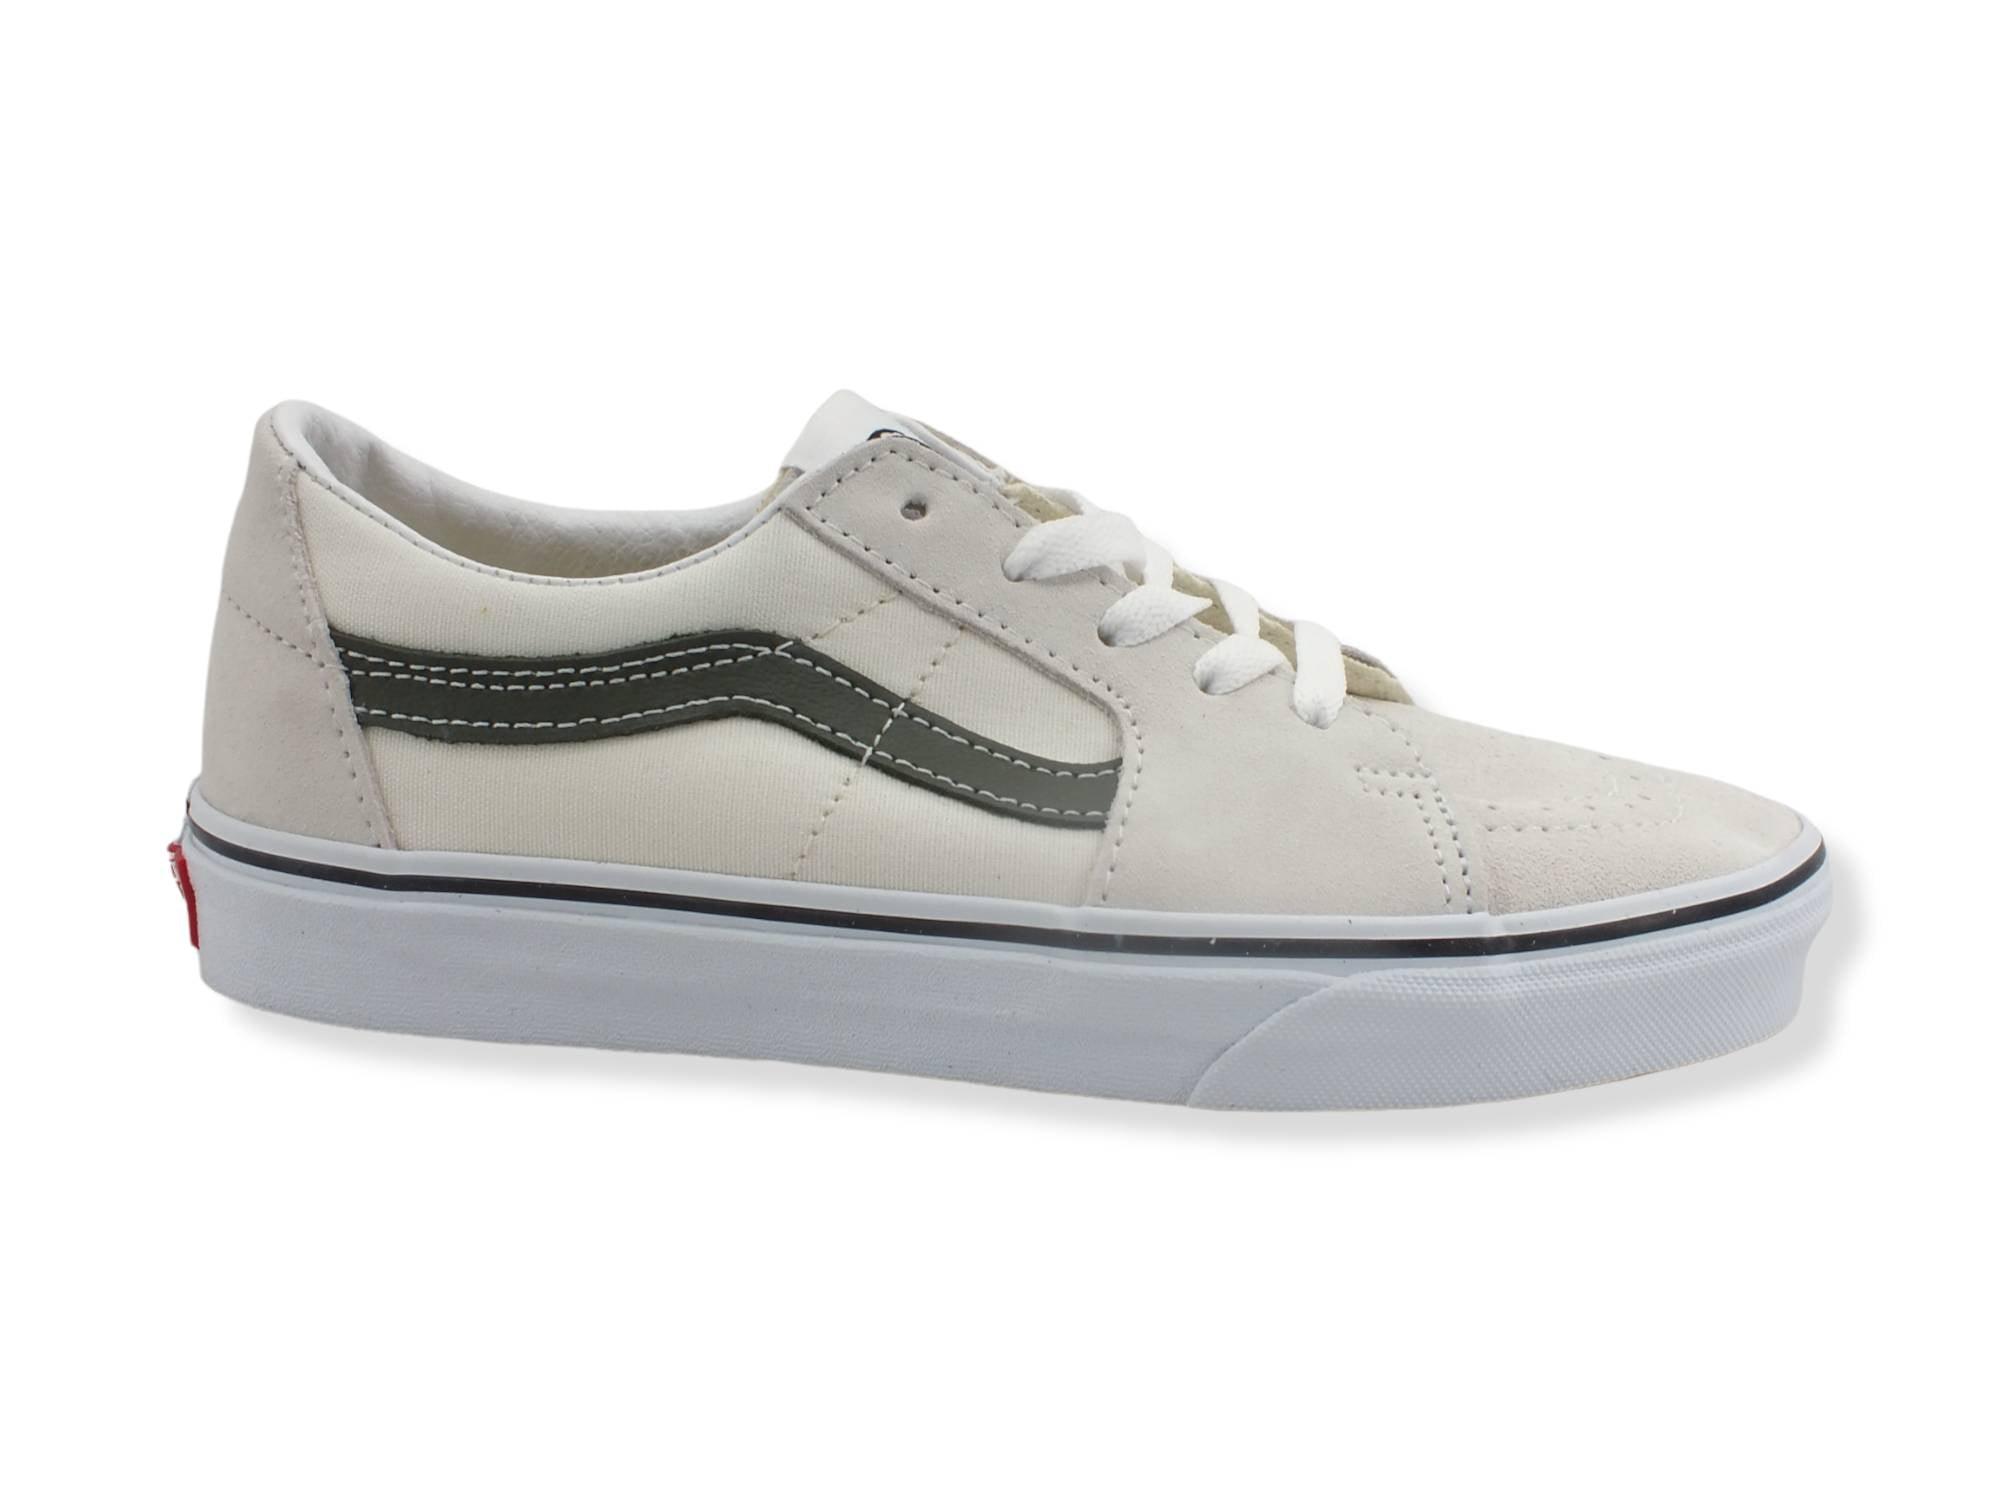 VANS Sk8 Low Sneaker White Khaki VN0A4UUKB361 - Sandrini Calzature e Abbigliamento